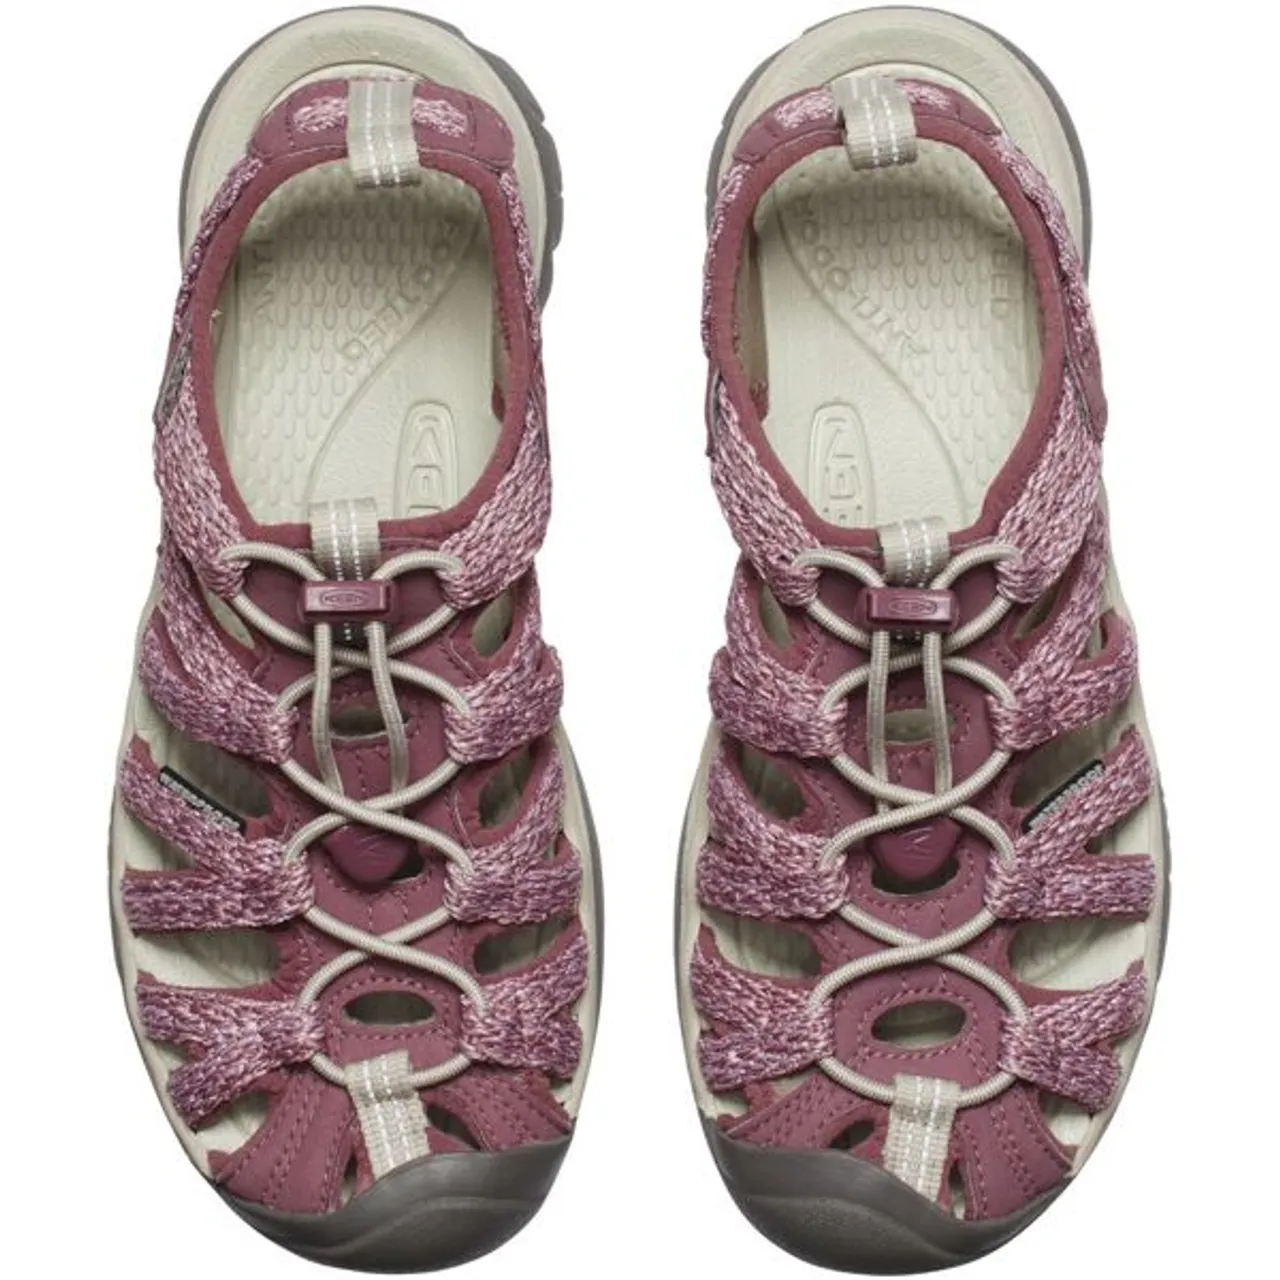 Sandale KEEN "WHISPER" Gr. 39, rosa (rose brown, peach parfait) Schuhe Halbschuhe